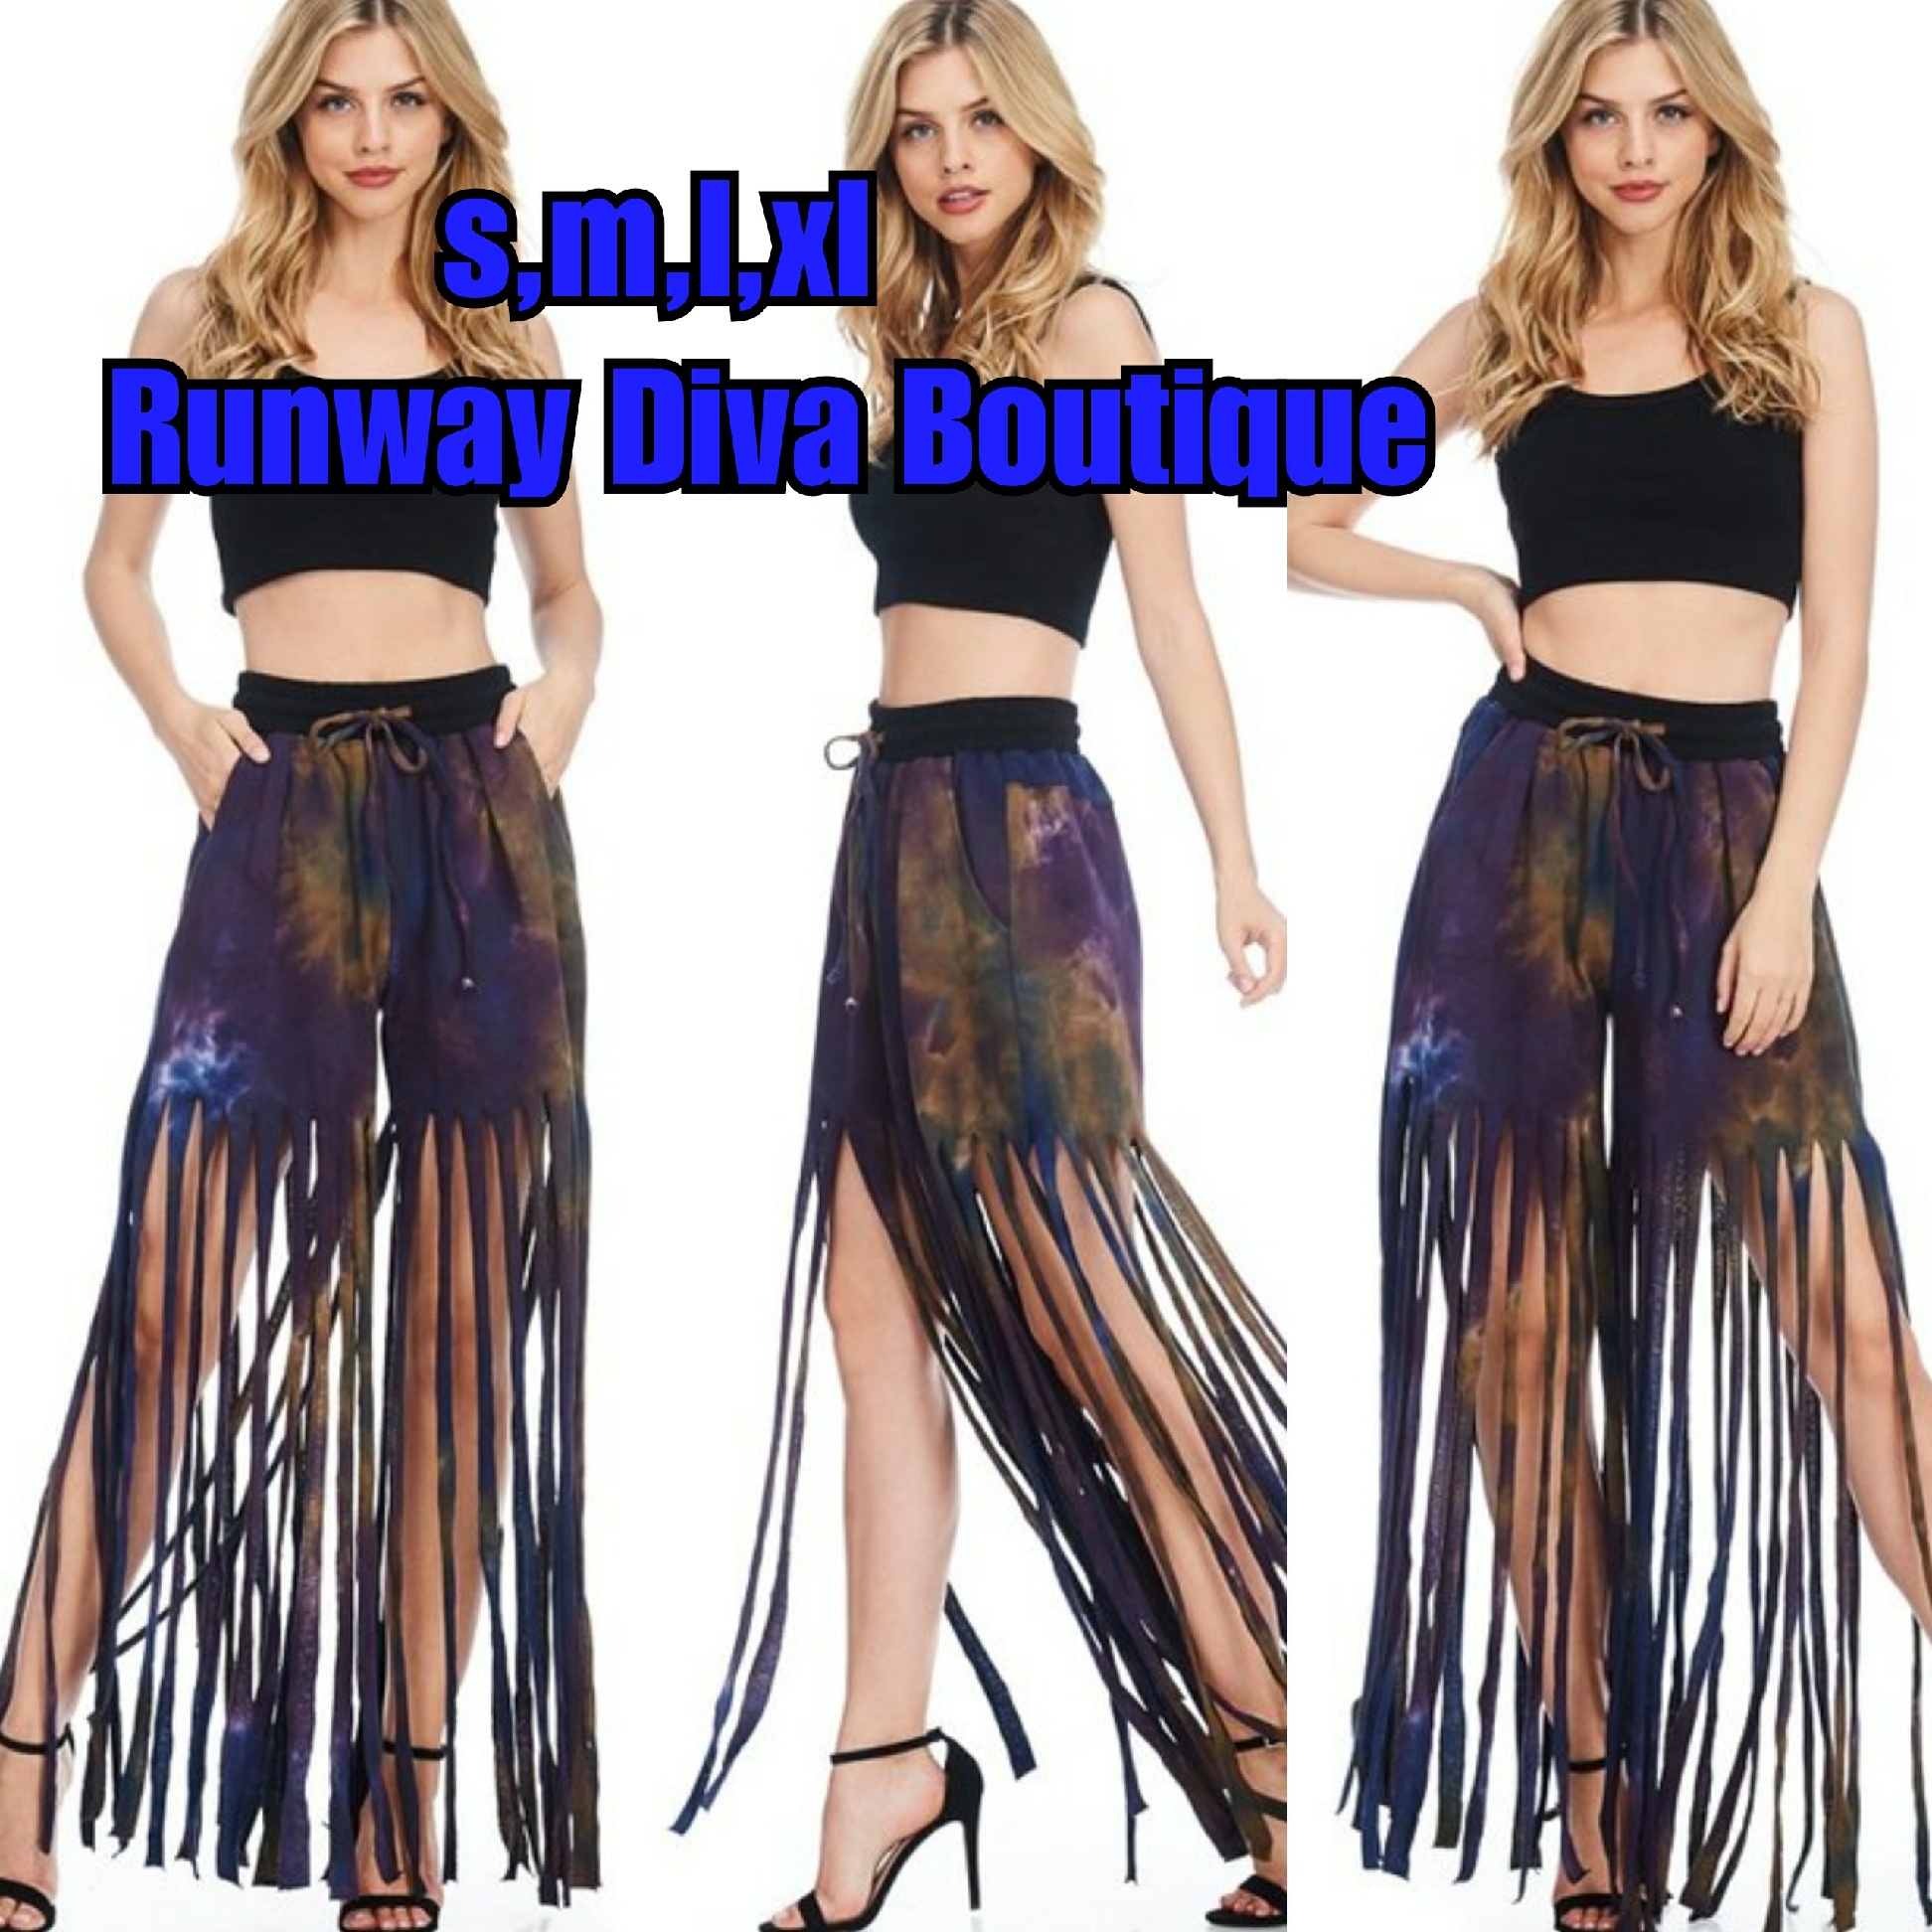 6 | Runway Diva Boutique